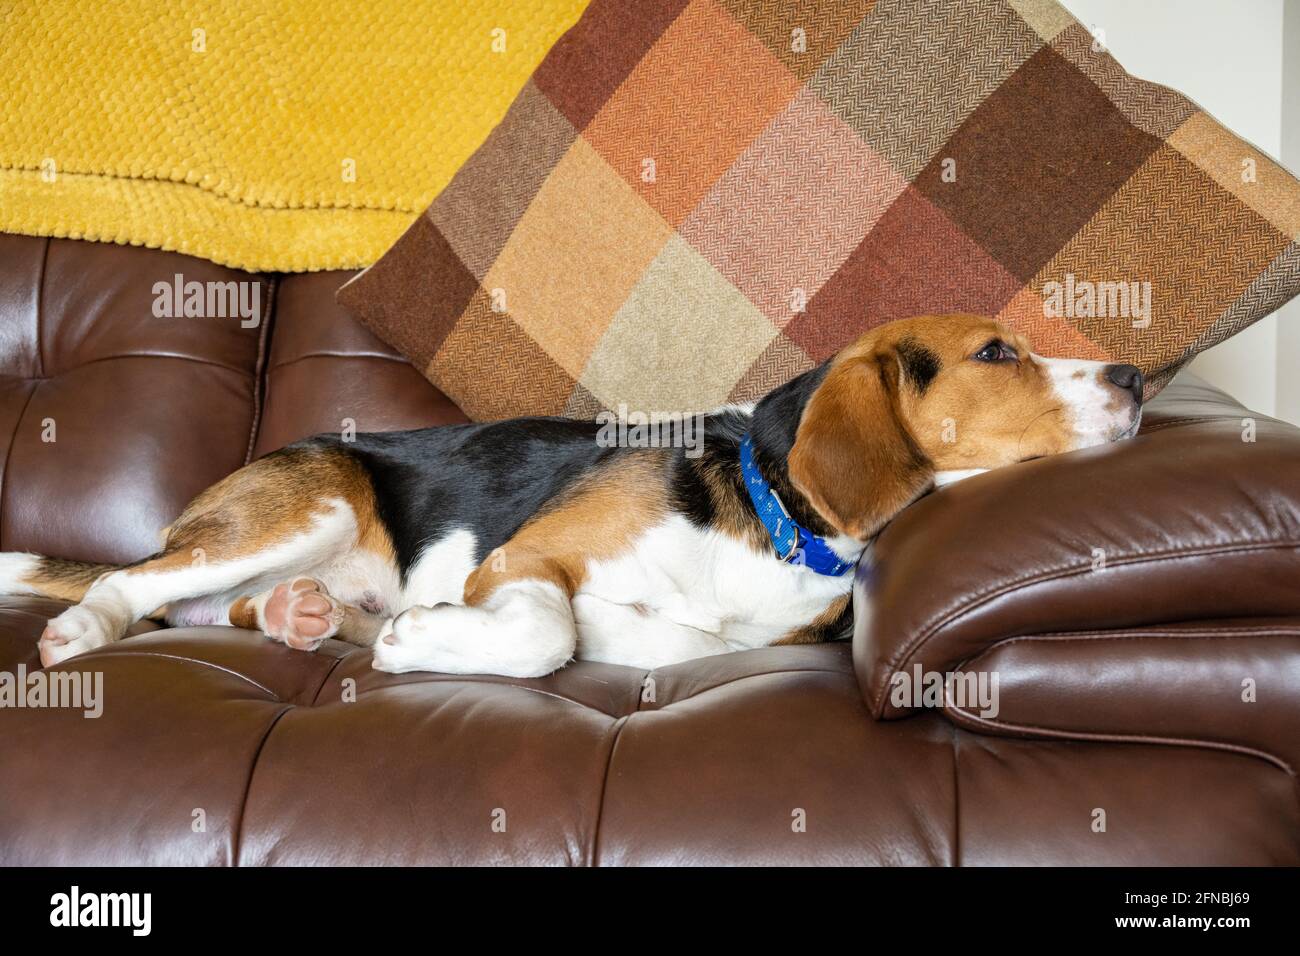 A single tricolour Beagle in a domestic indoor home setting. Stock Photo